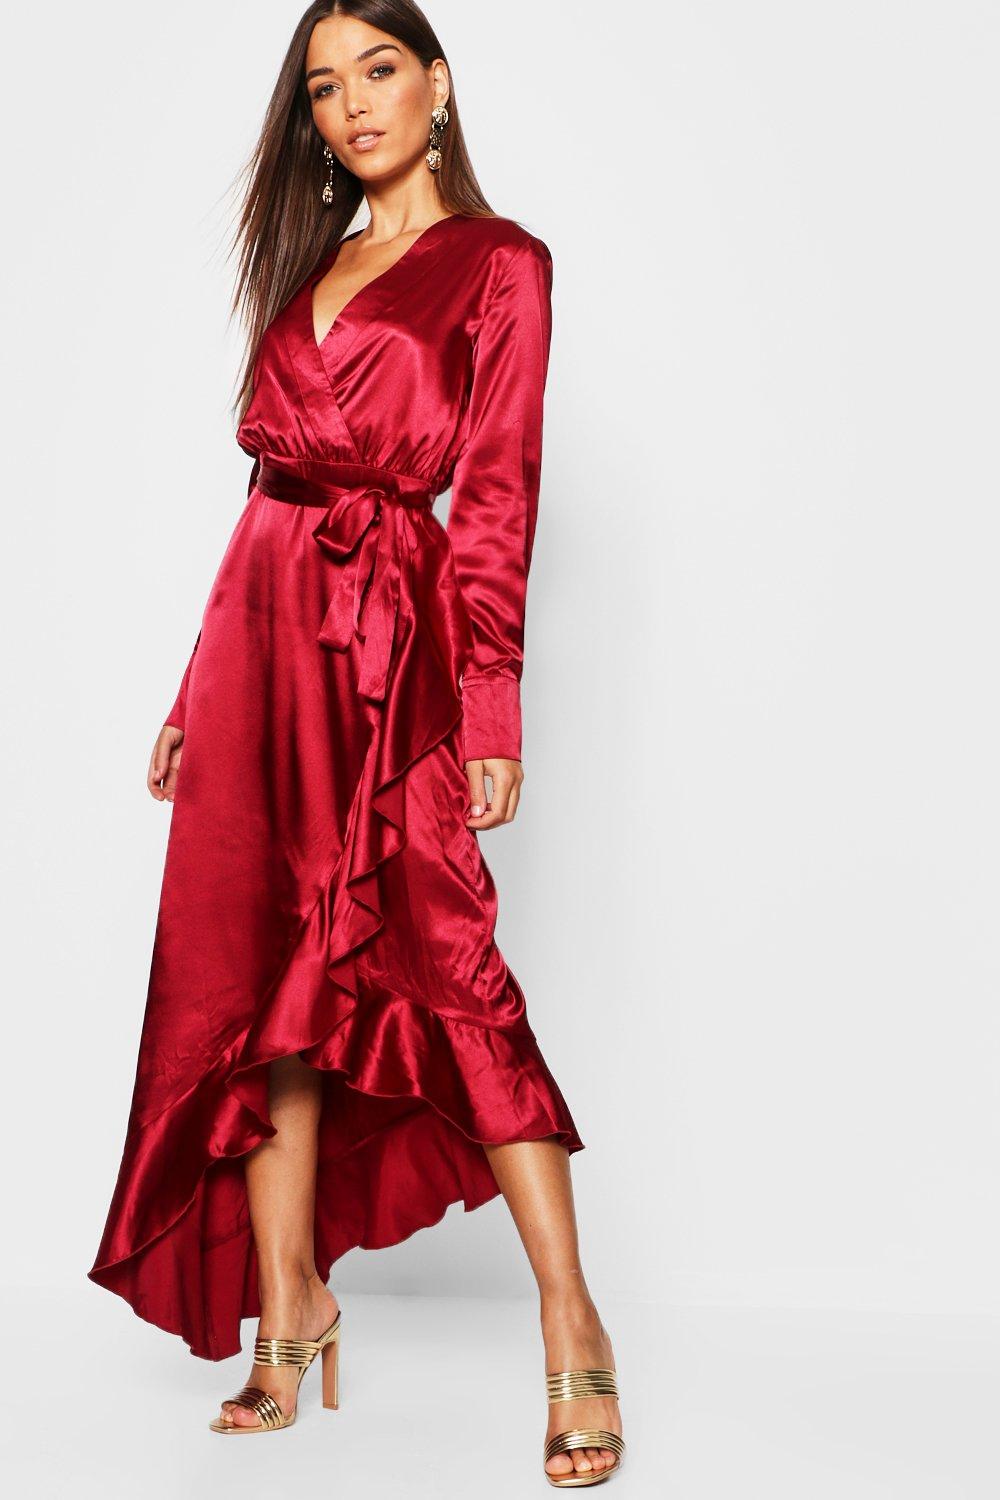 boohoo burgundy dress